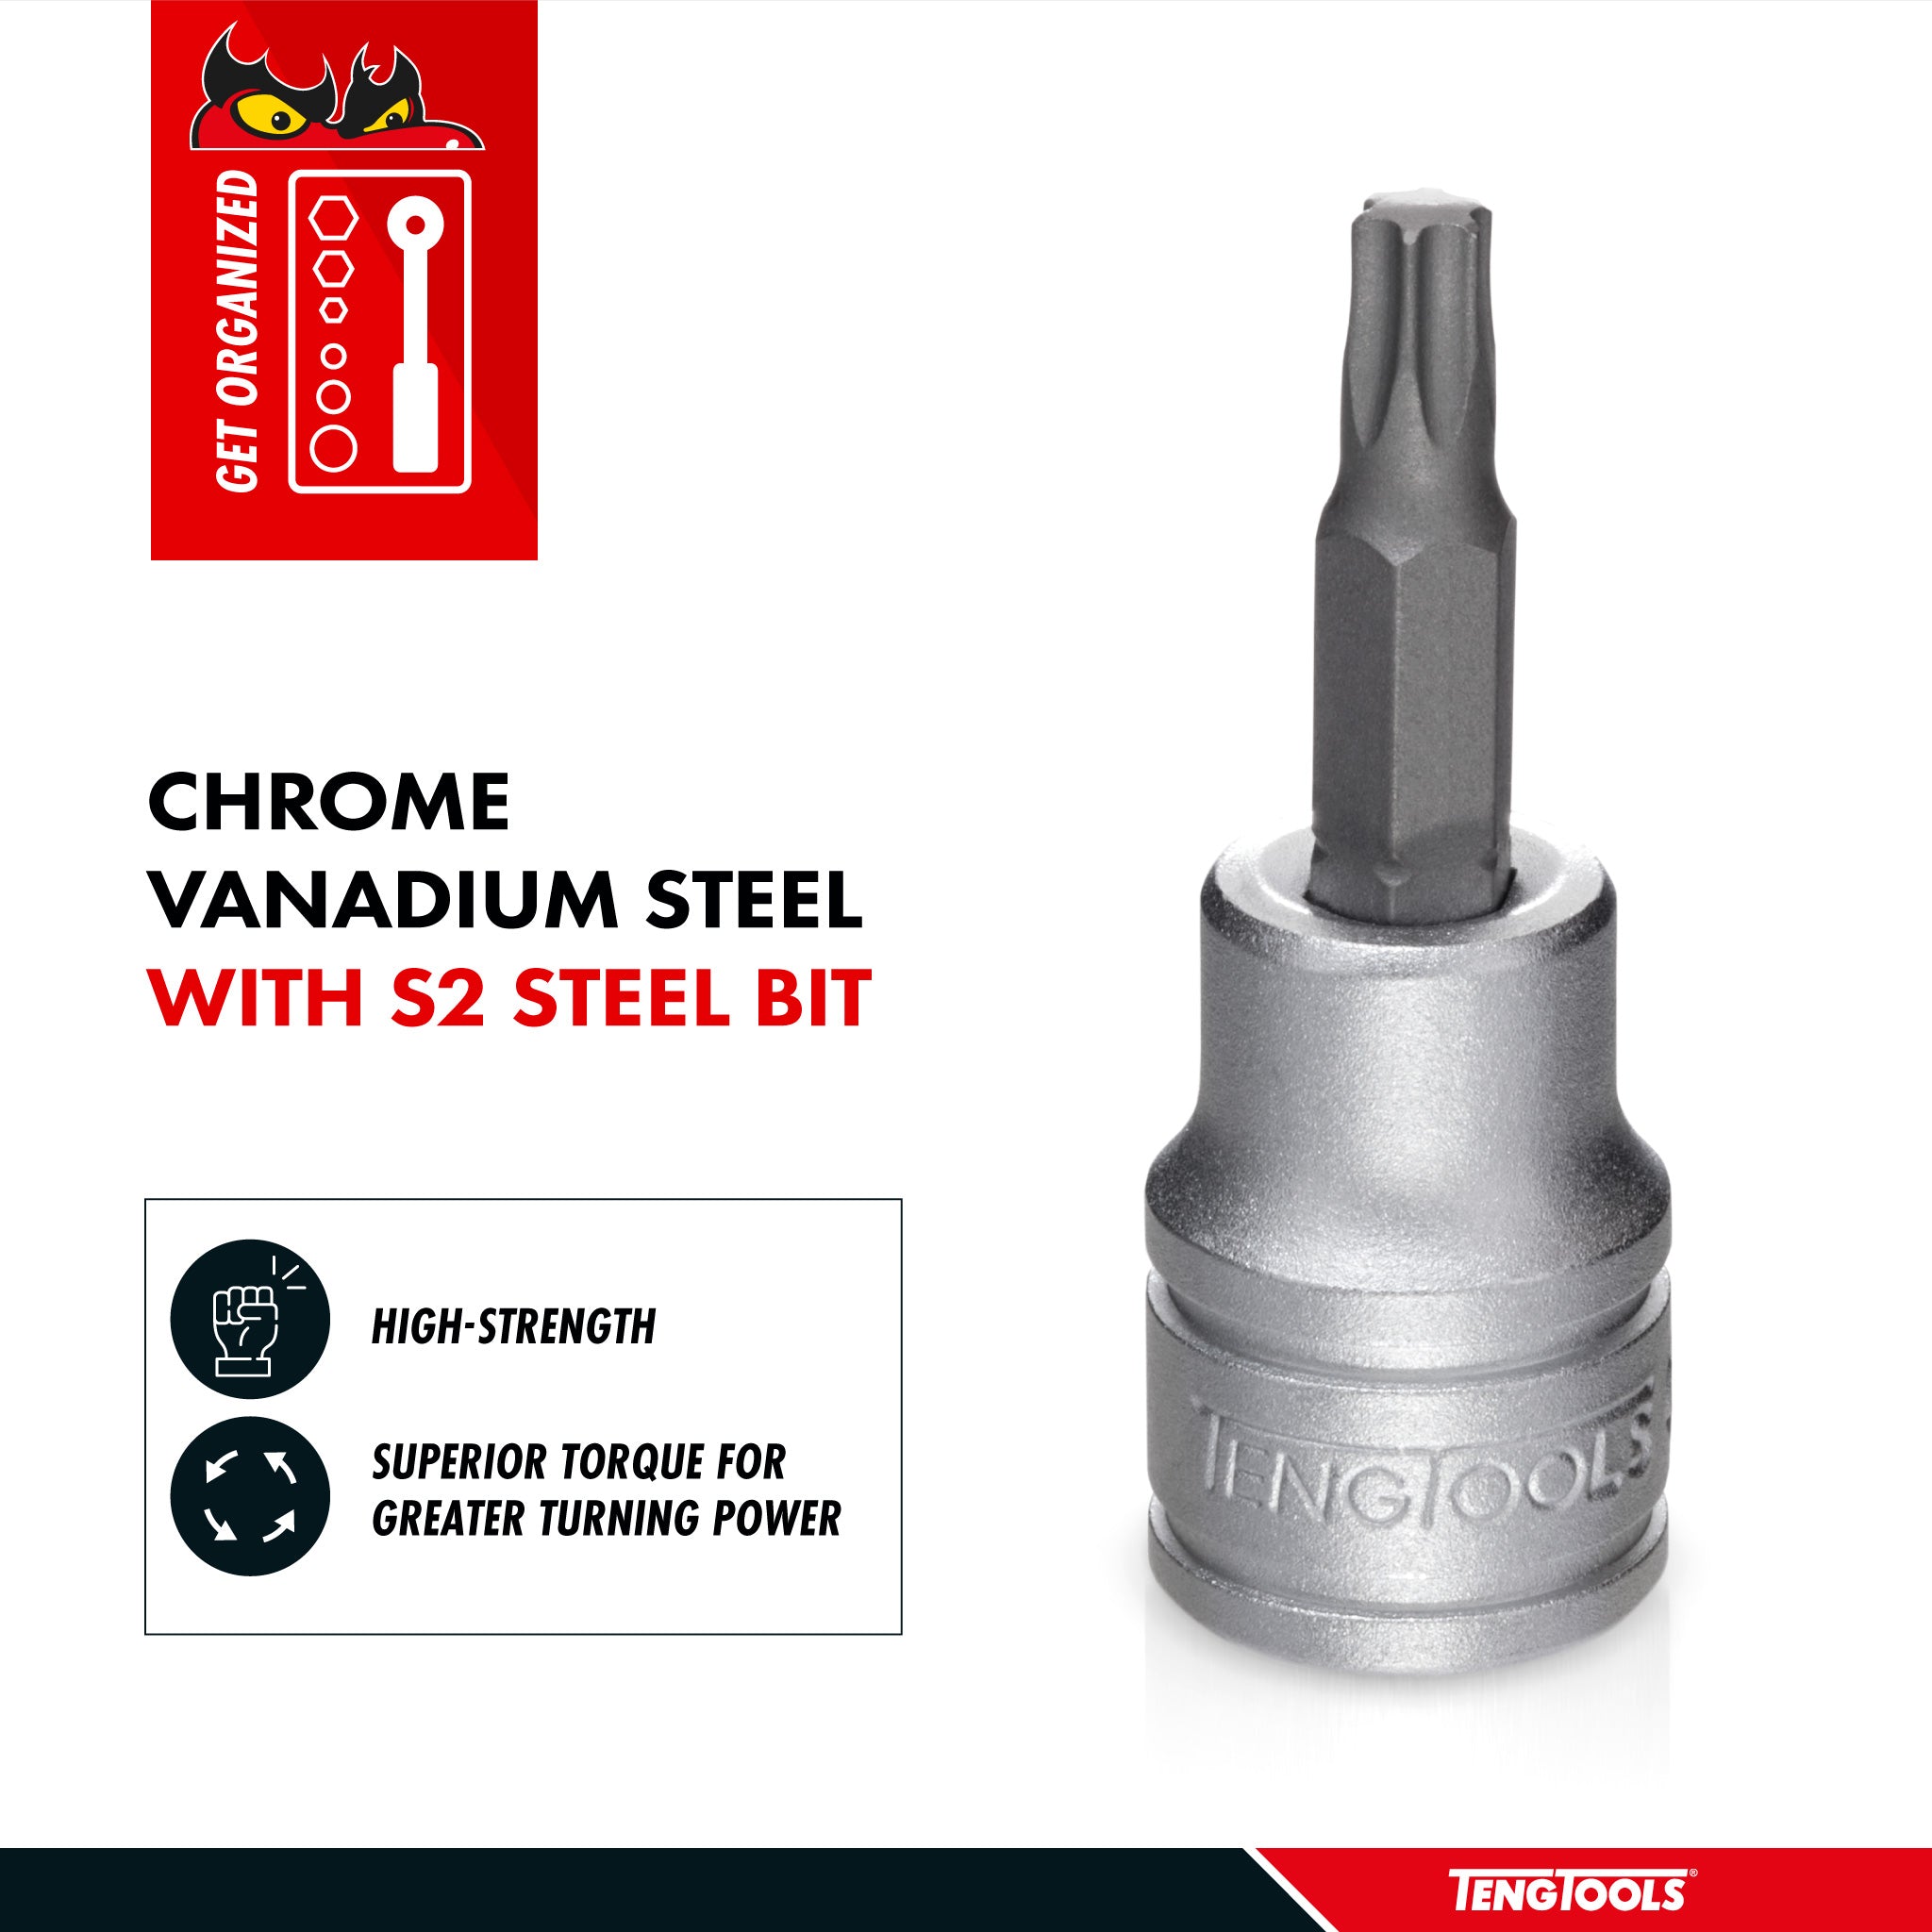 Teng Tools 1/2 Inch Drive Metric Torx TX Chrome Vanadium Sockets - TX50